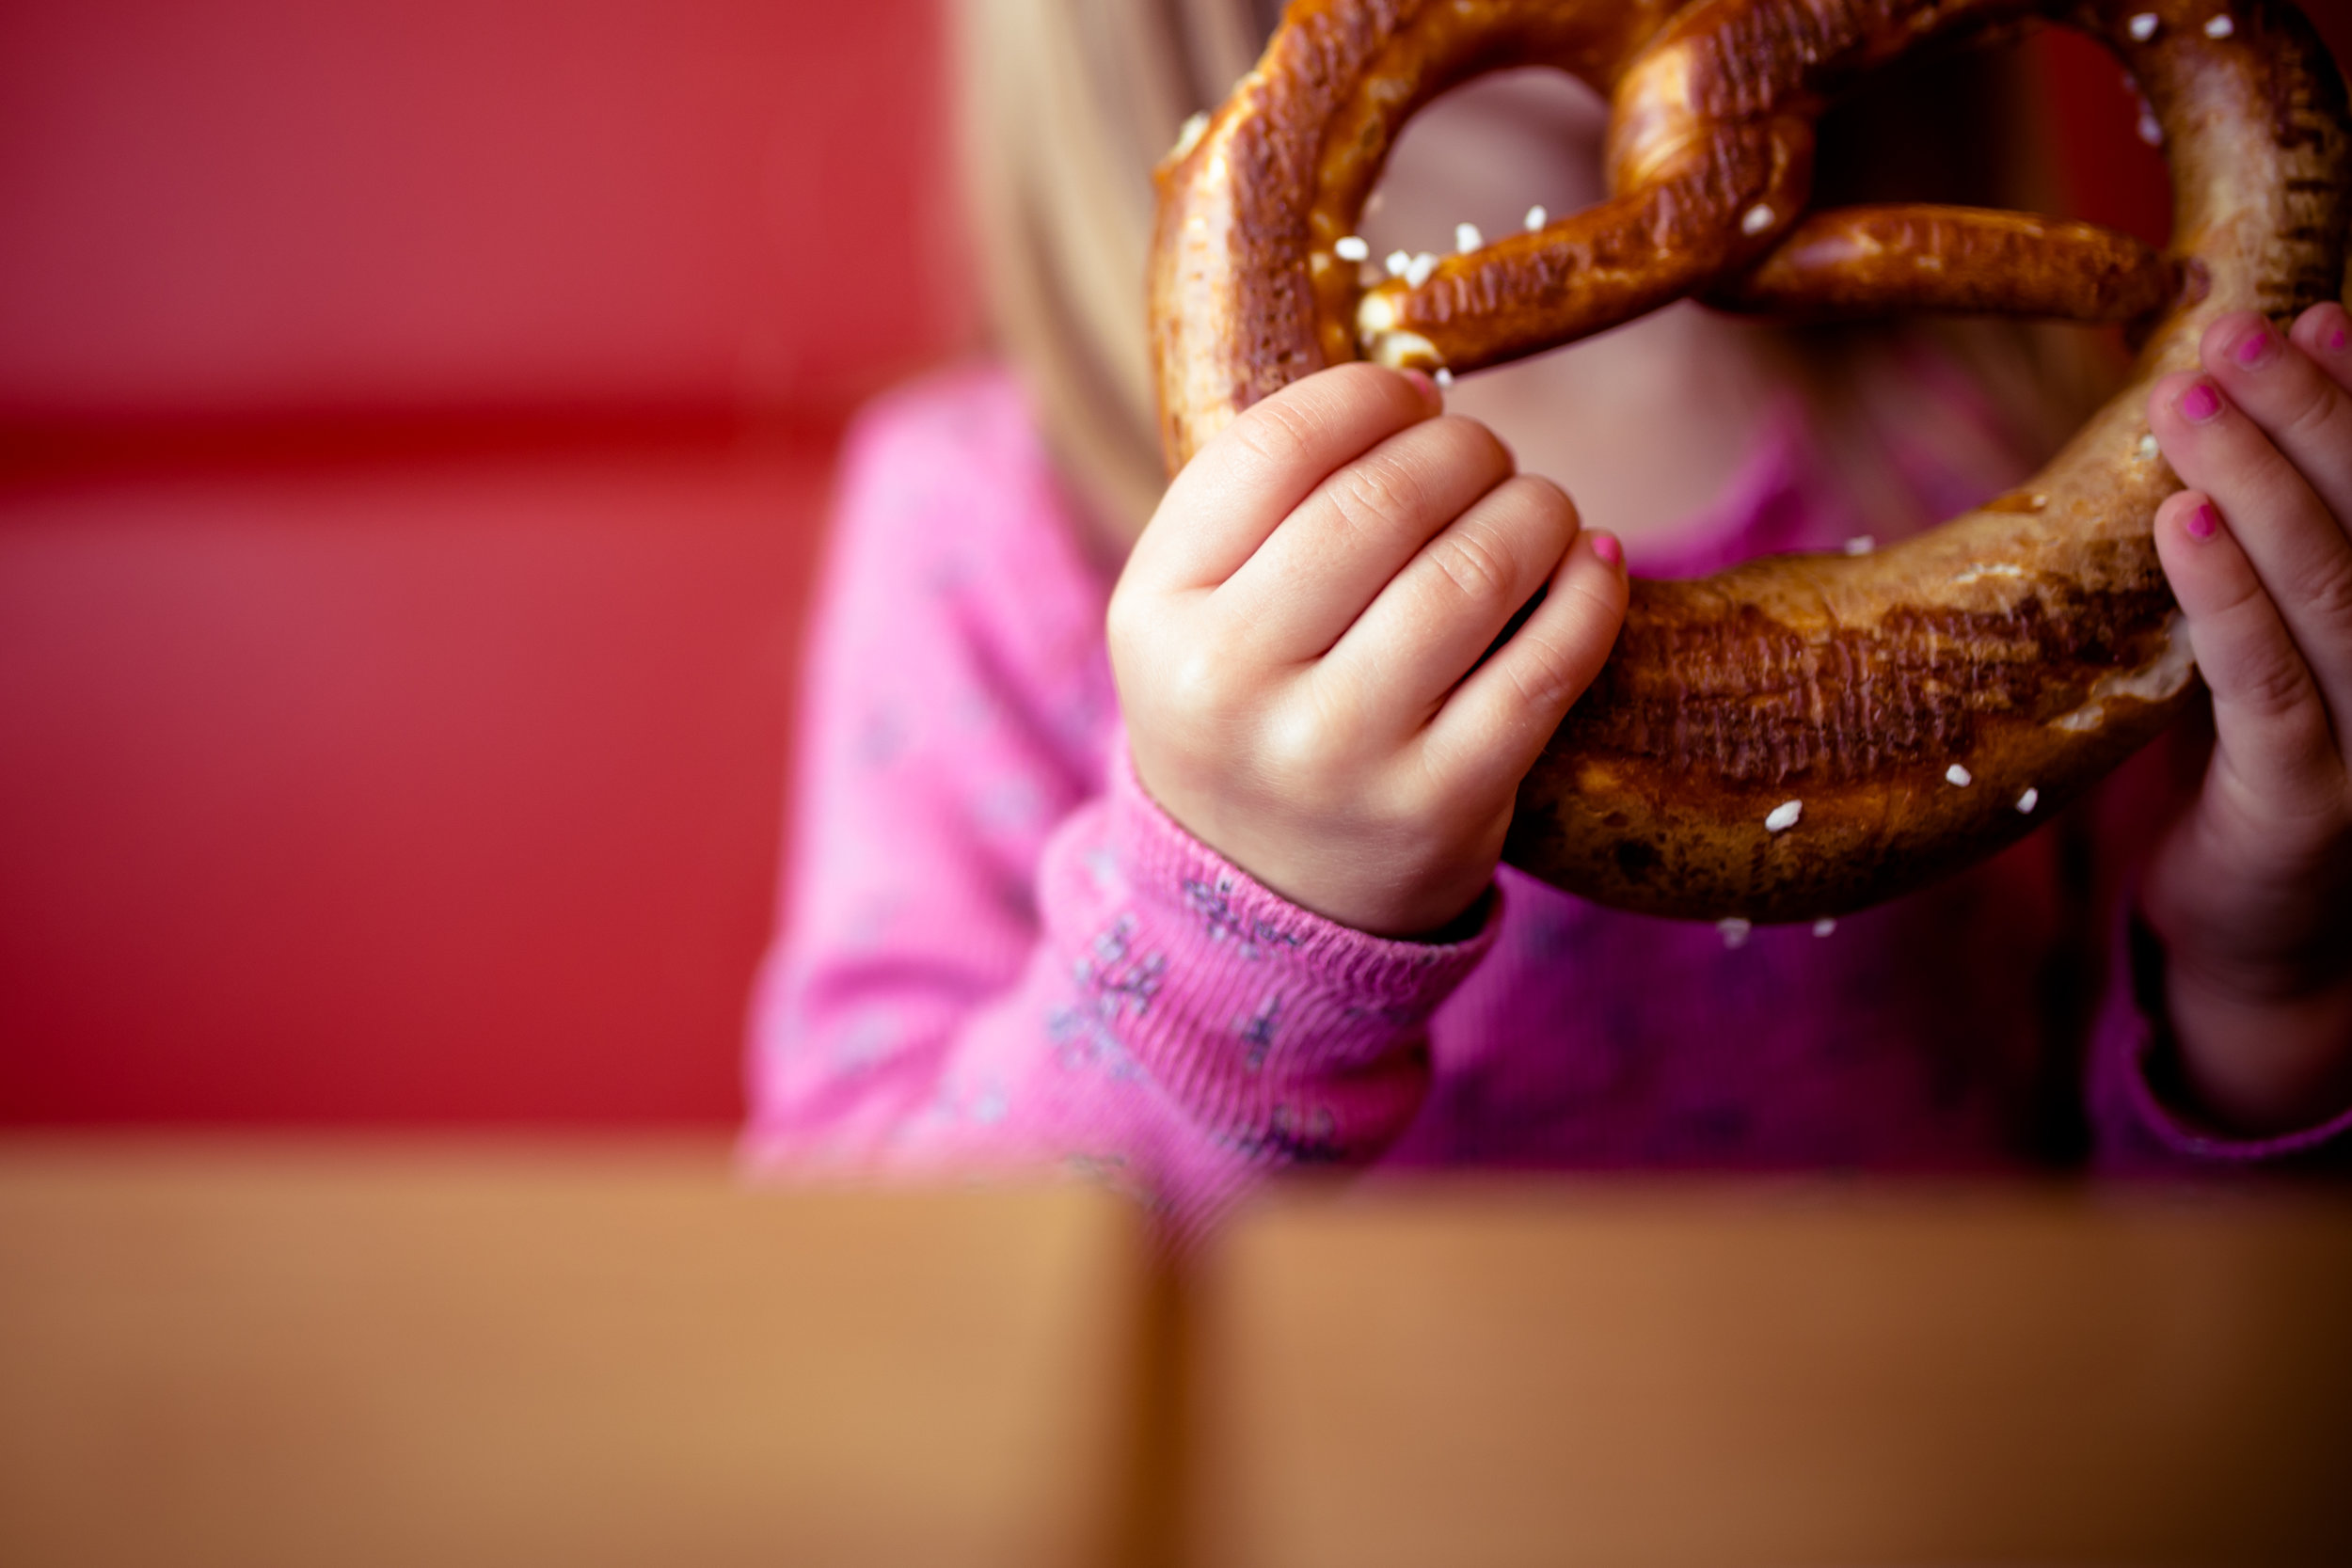 girl holds salted pretzel at bakery table